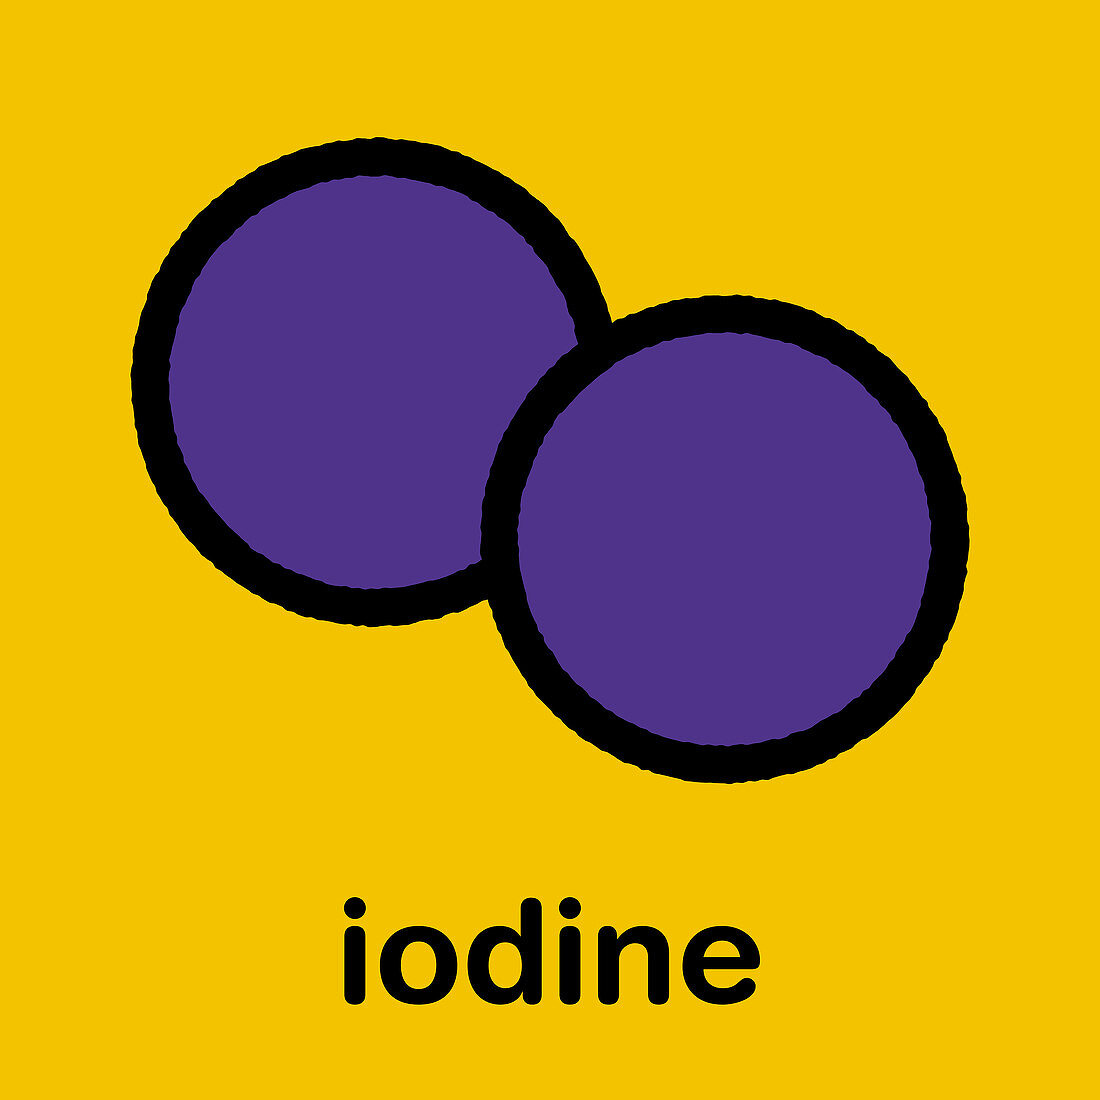 Iodine molecule, illustration